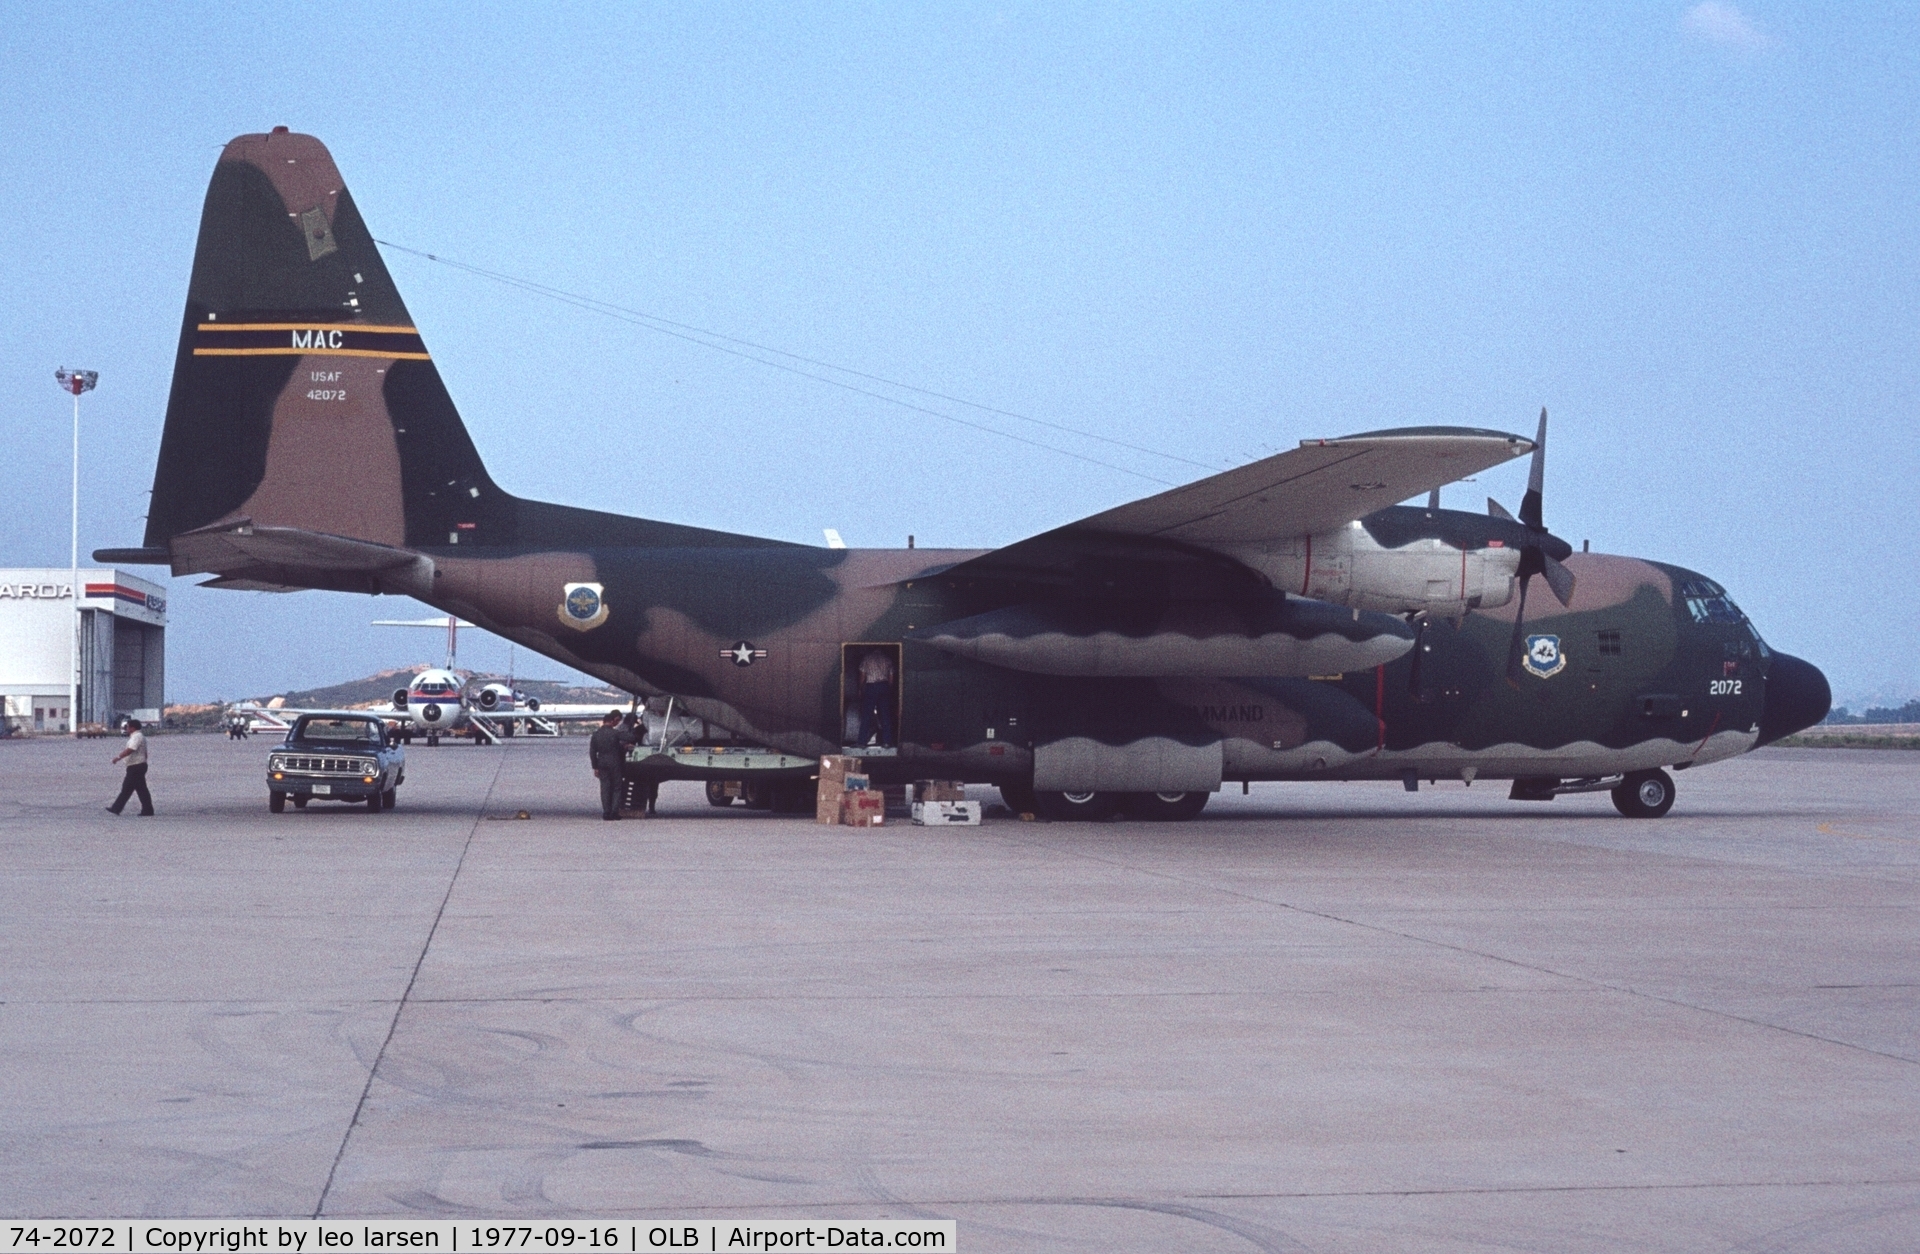 74-2072, 1974 Lockheed C-130H Hercules C/N 382-4705, Olbia 16.9.1977